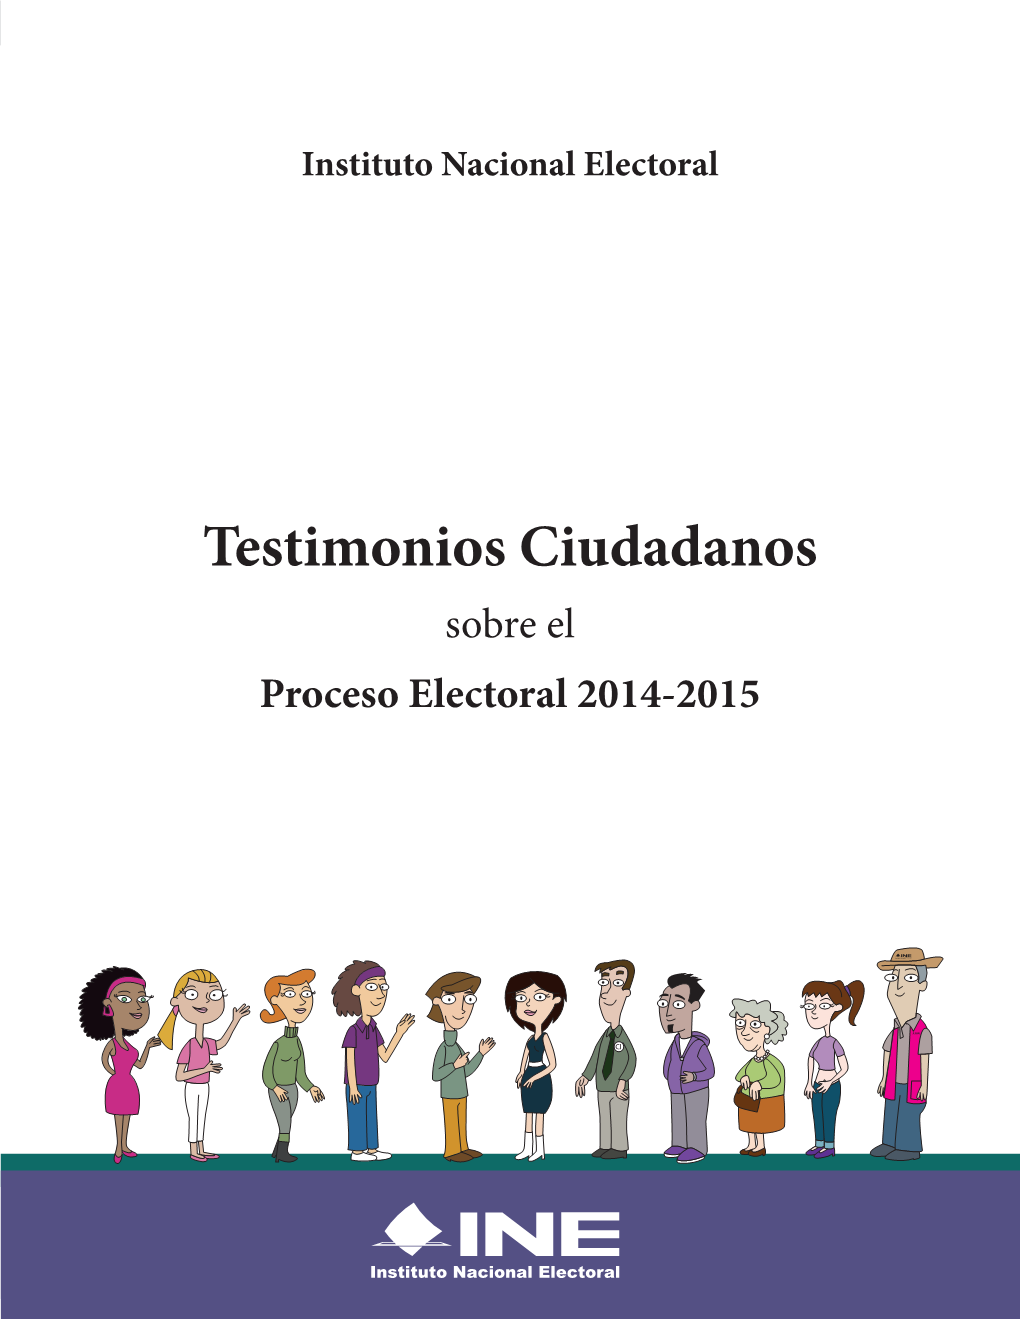 Testimonios Ciudadanos E R B O S Sobre El Nos a a D Proceso Electoral 2014-2015 D U I Os C N I Im O T E S T